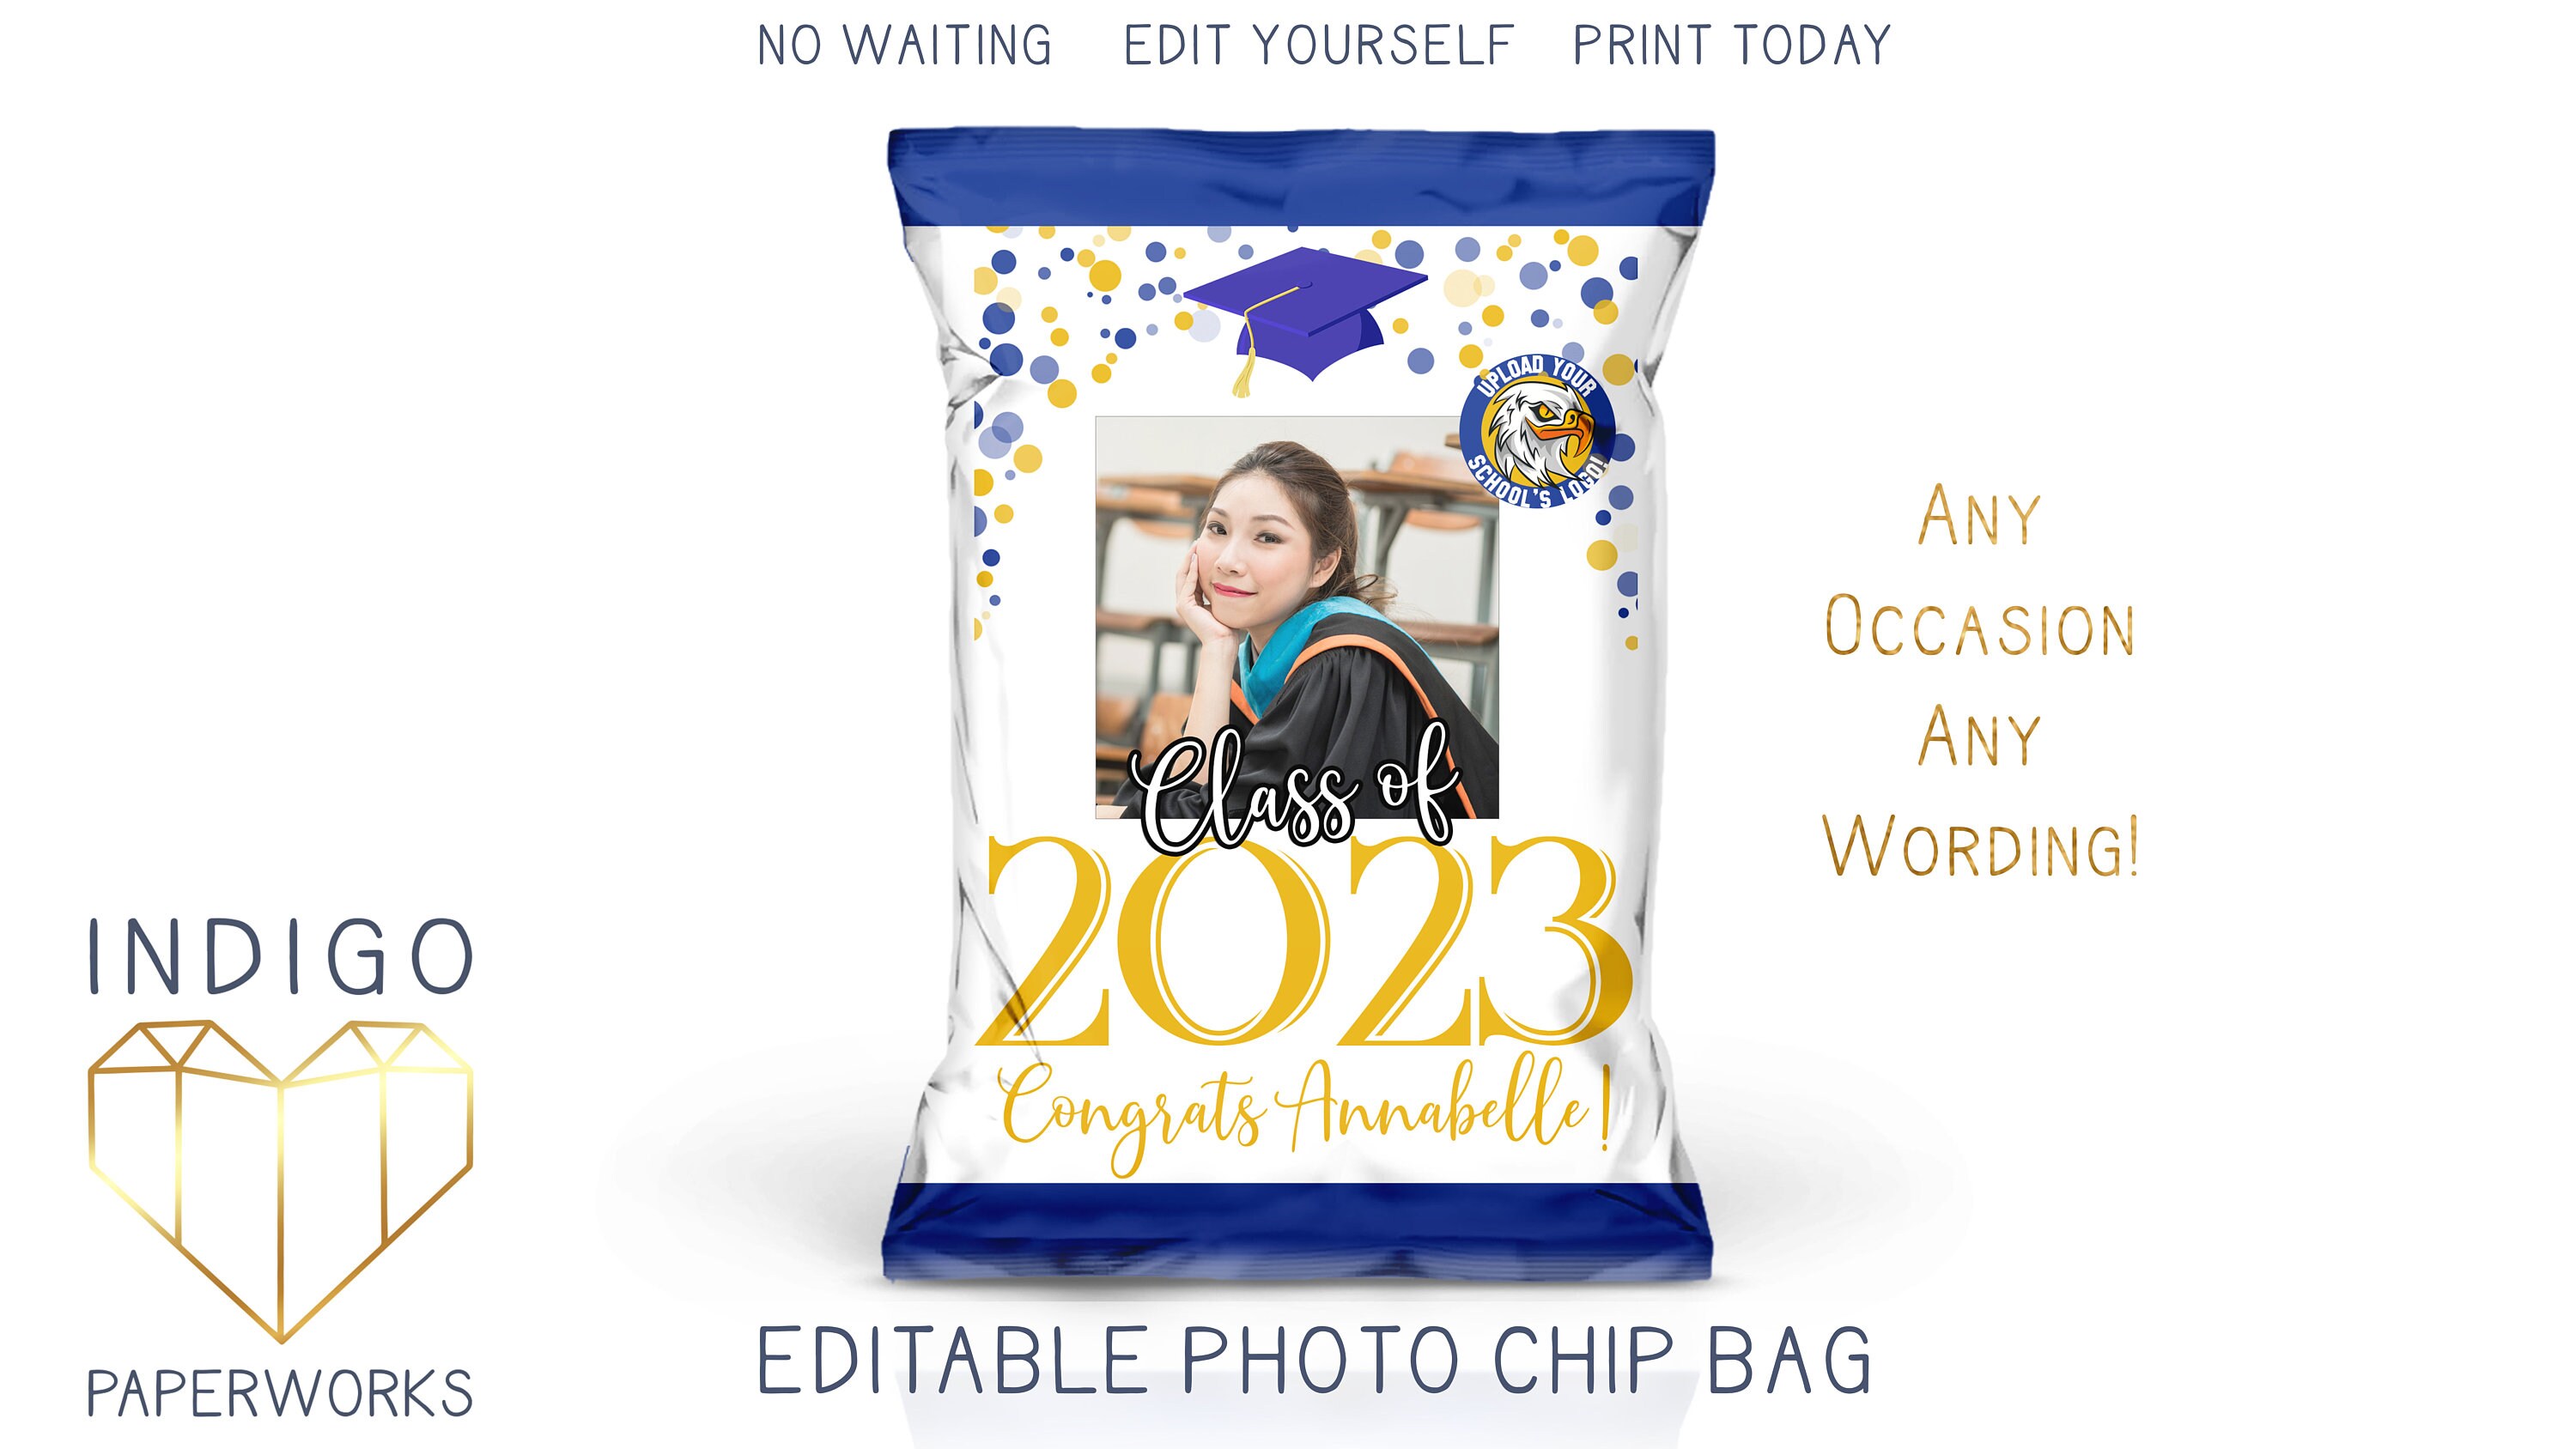 Graduation Hat Gold Foil Seal Stickers for Graduation announcements -  CutCardStock